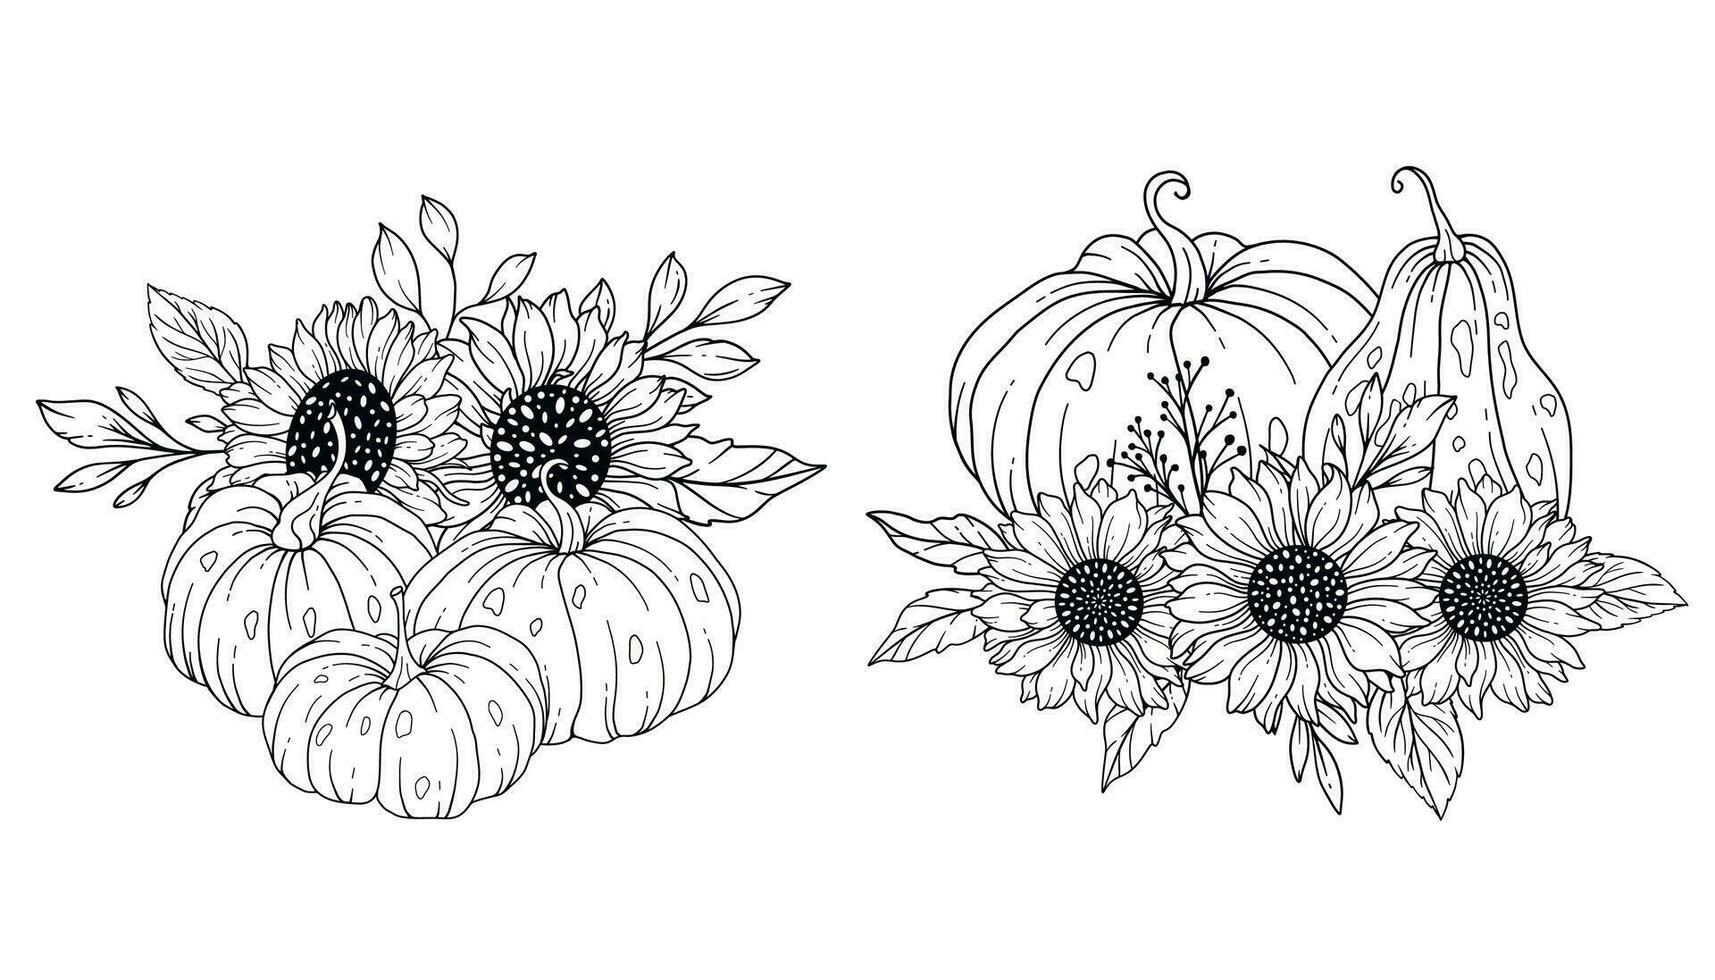 Pumpkins with Sunflowers Line Art Illustration, Outline Pumpkin arrangement Hand Drawn Illustration. Coloring Page with Pumpkins.  Thanksgiving Pumpkins set vector